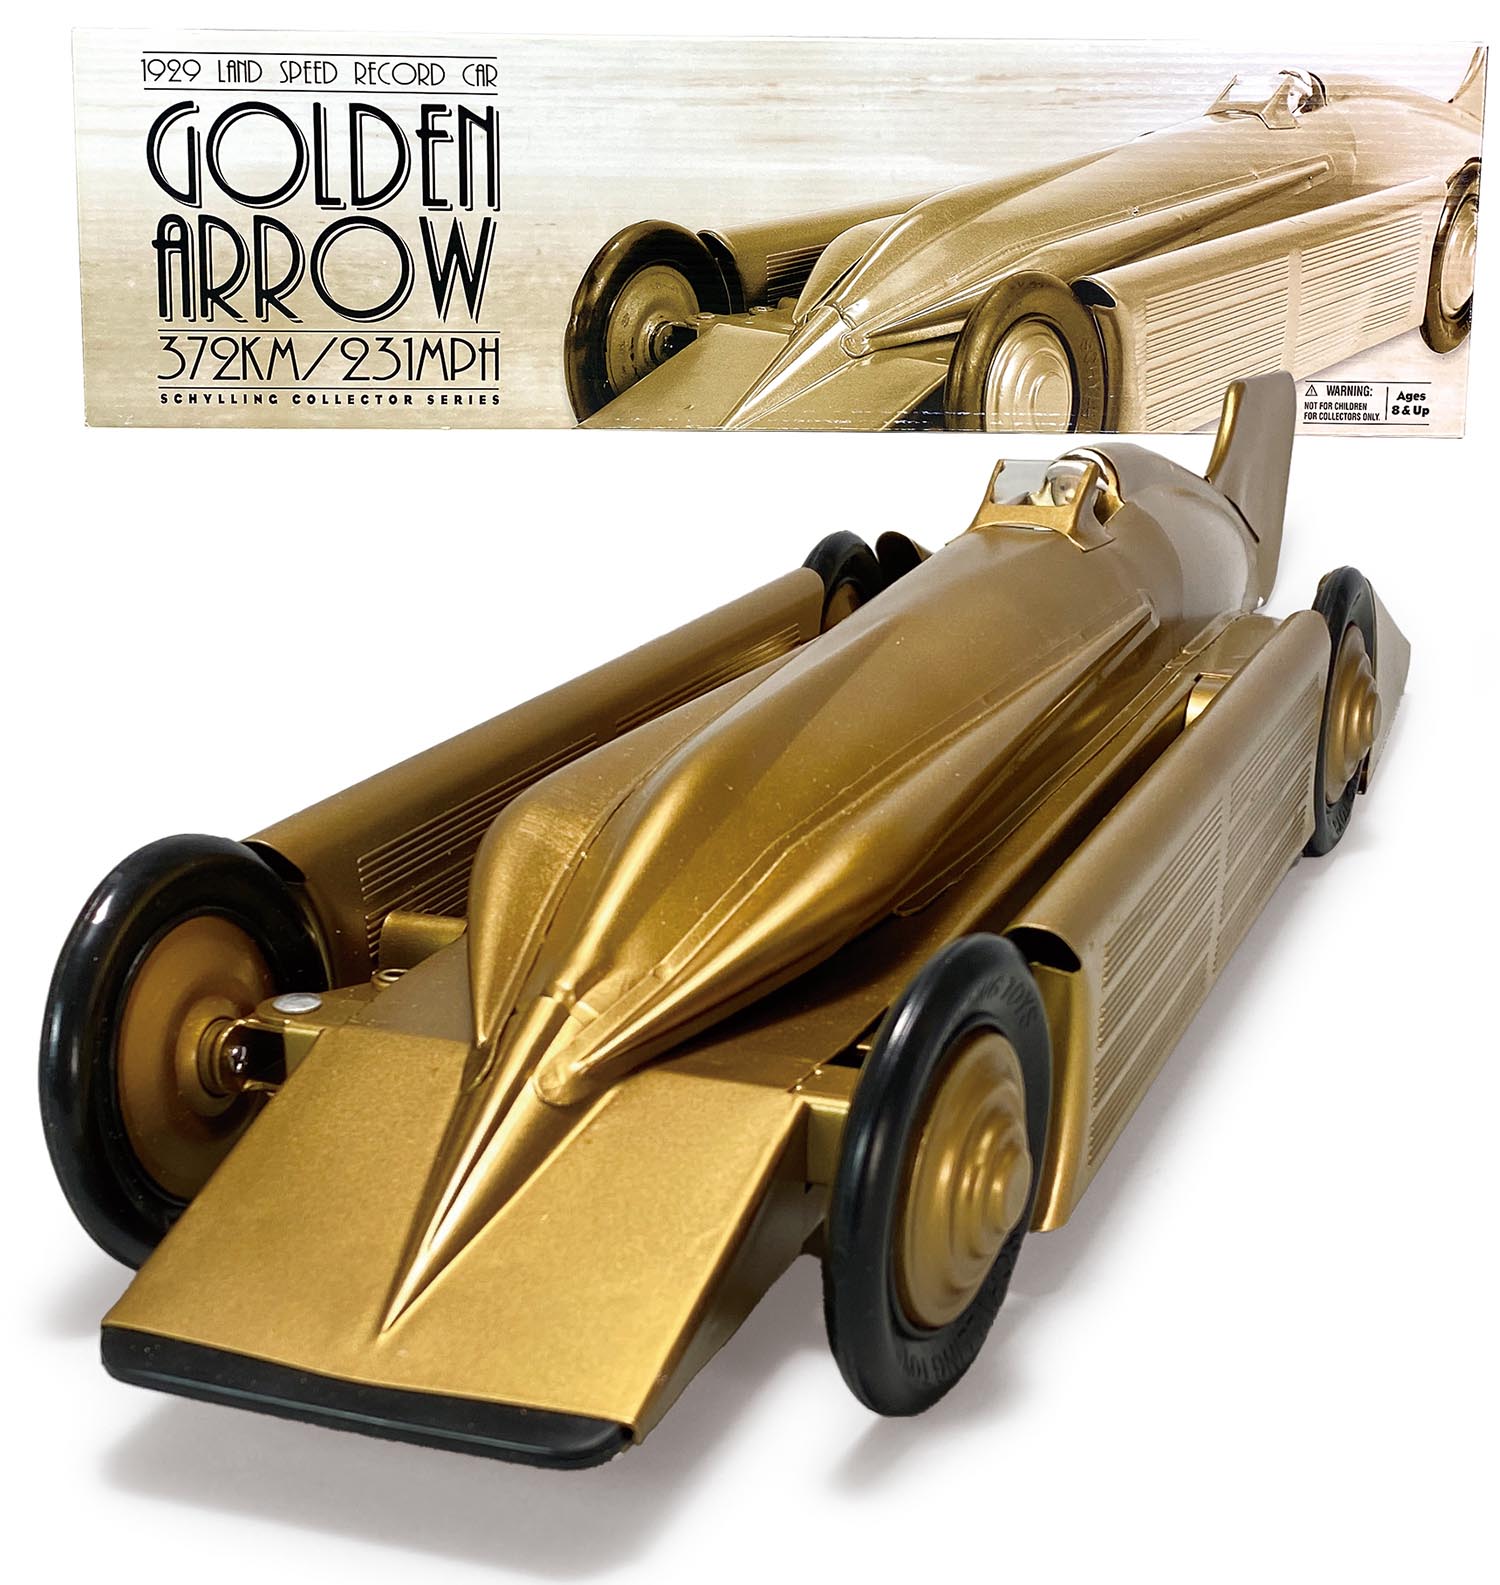 1929 Land Speed record car-Golden Arrow